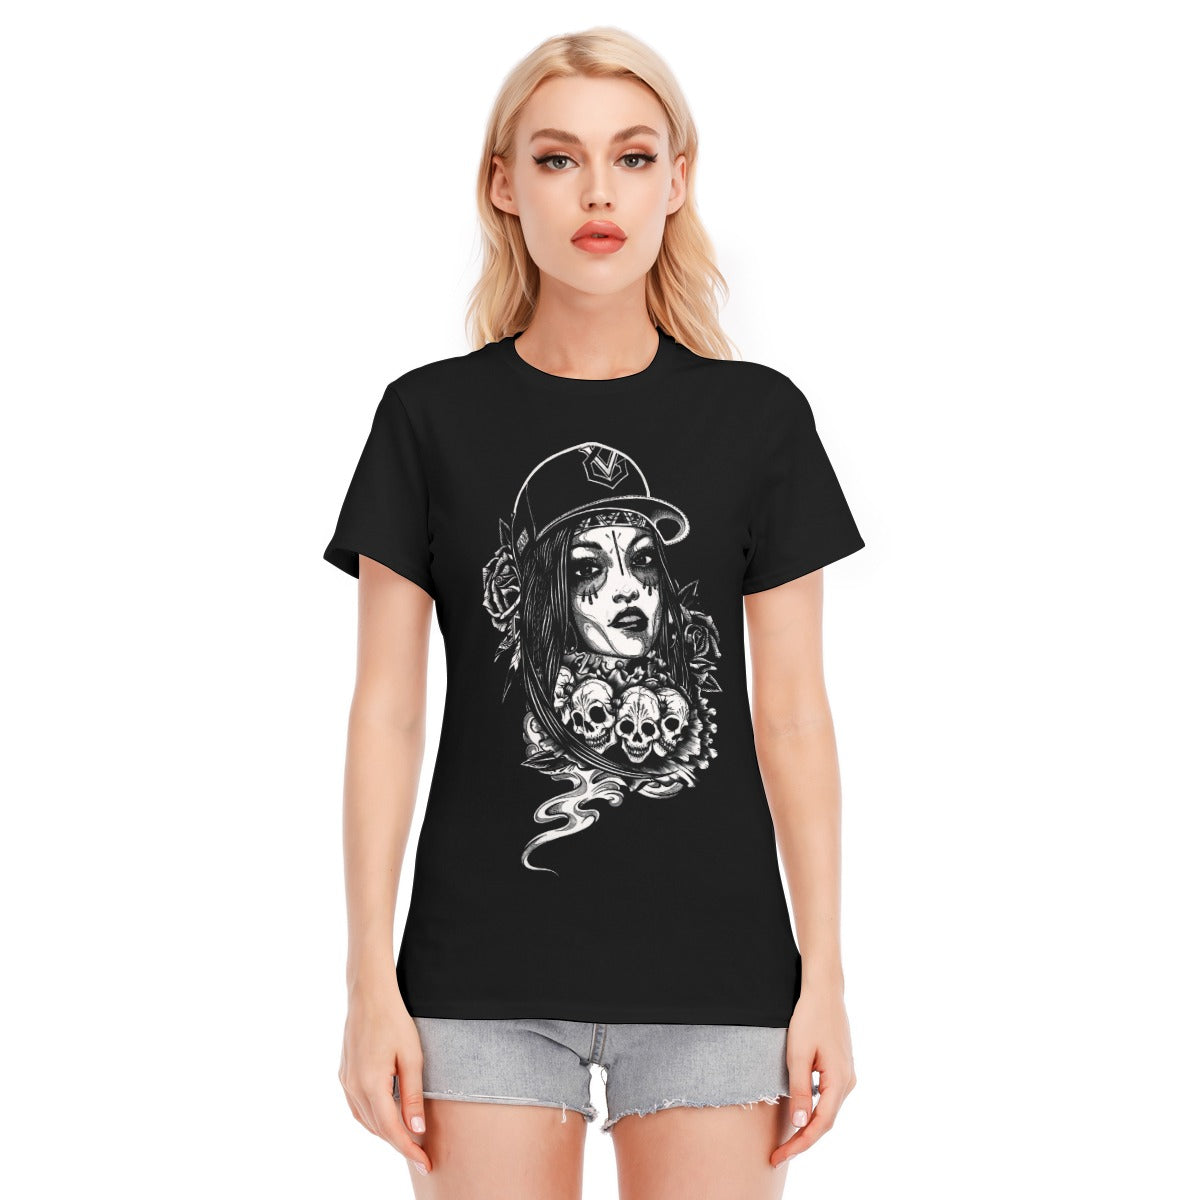 Skulls with Girl Women's T-Shirt (100% Cotton) - T0221